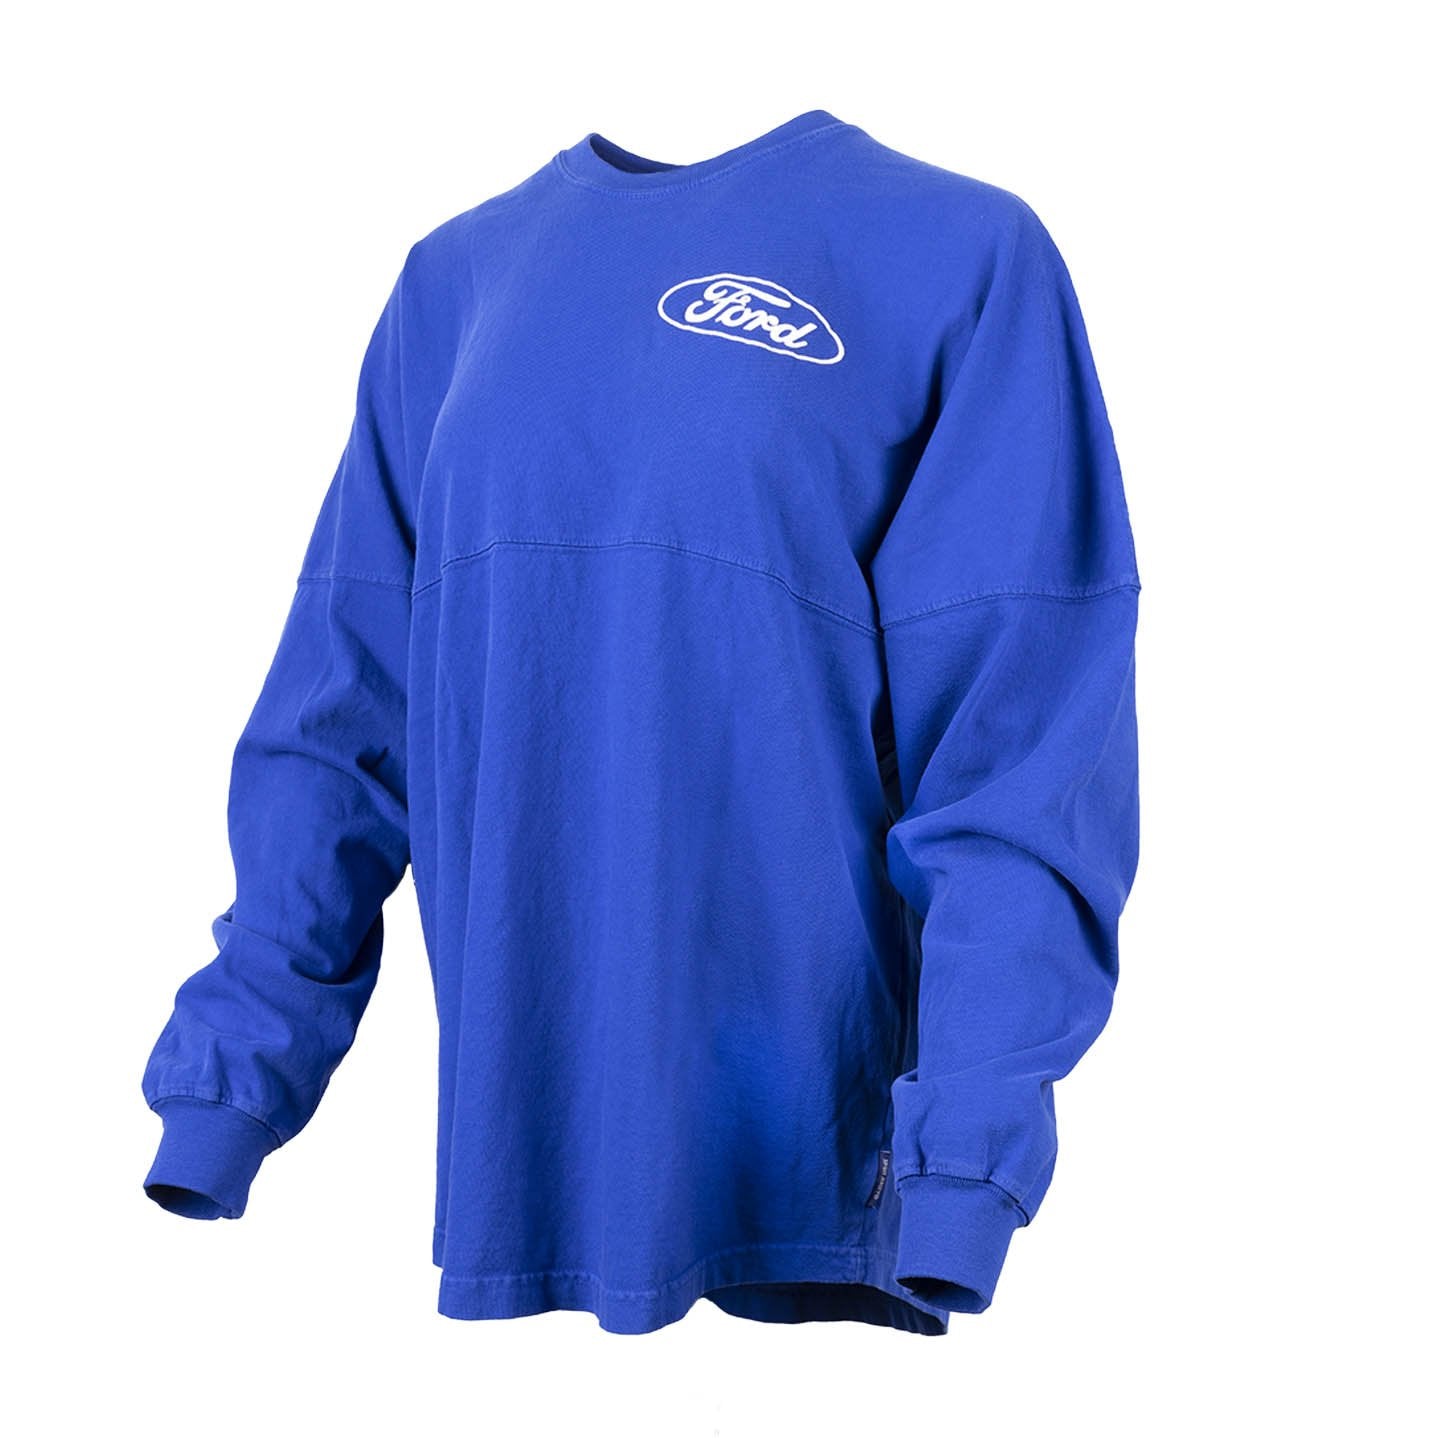 günstigen Preisen erhältlich. Ford Women\'s Script American Merchandise Spirit Jersey Official Original T-Shirt- Ford Sleeve Long